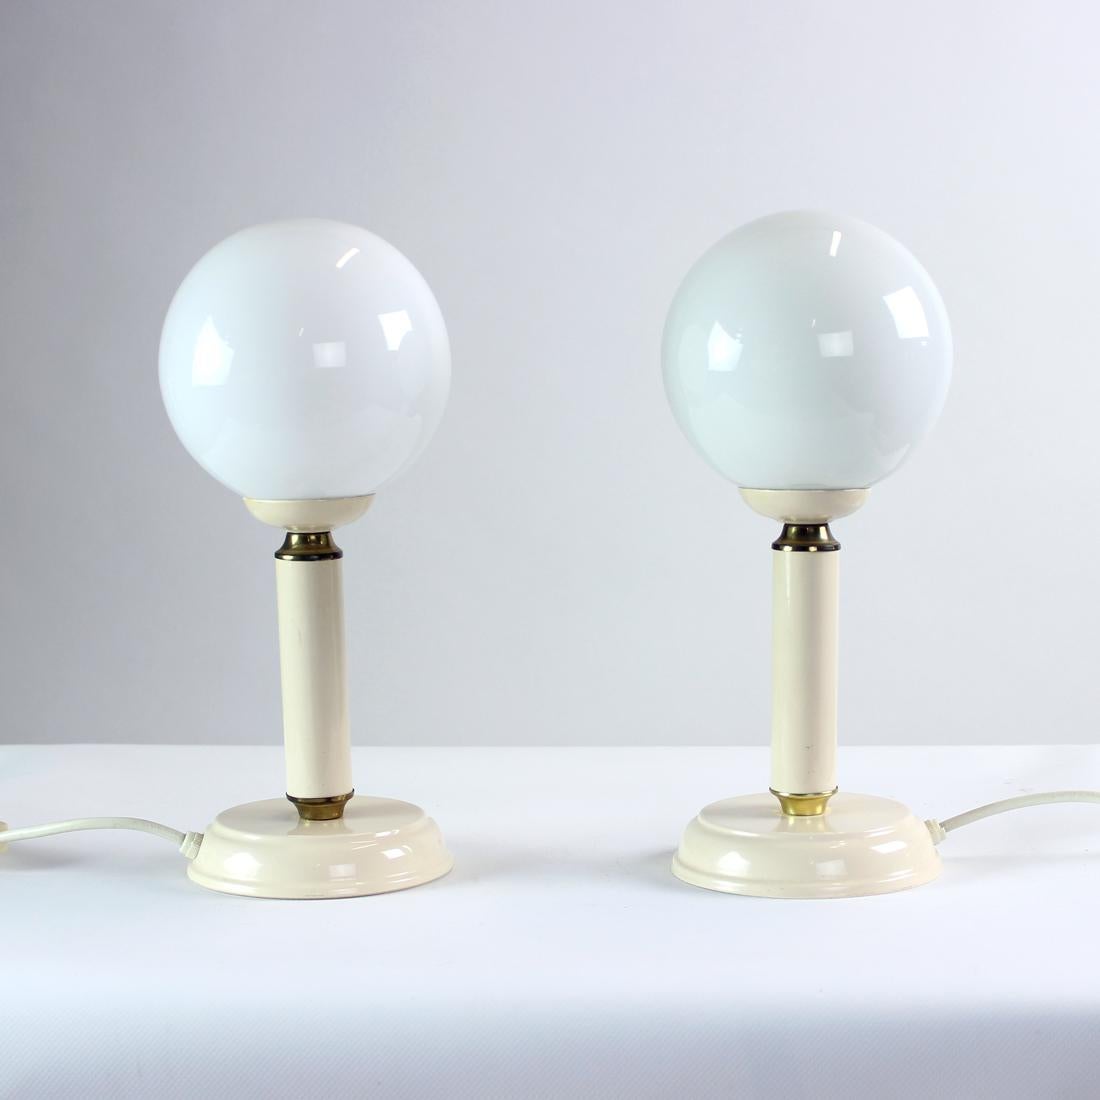 Slovak Pair of Opaline Glass Lamps, Czechoslovakia, 1970s For Sale